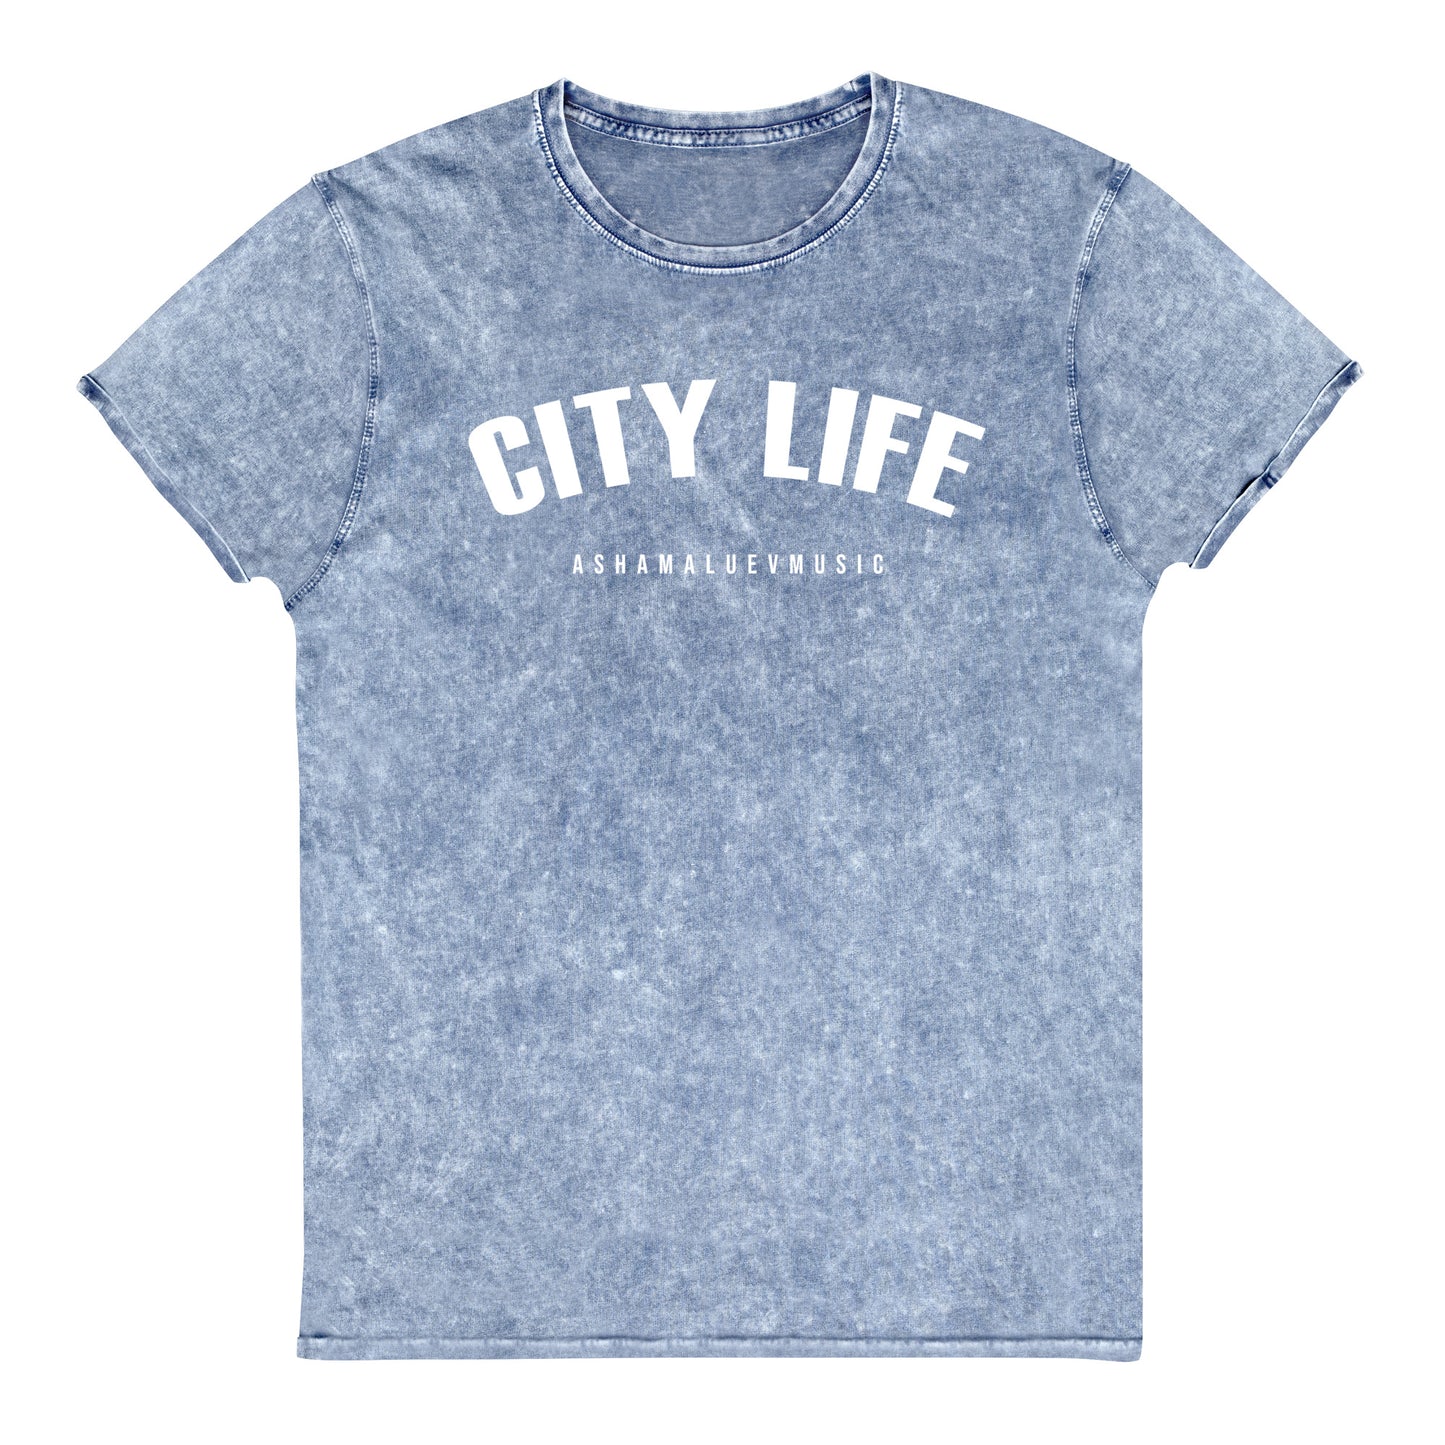 Denim T-Shirt "City Life" (Film Printing)